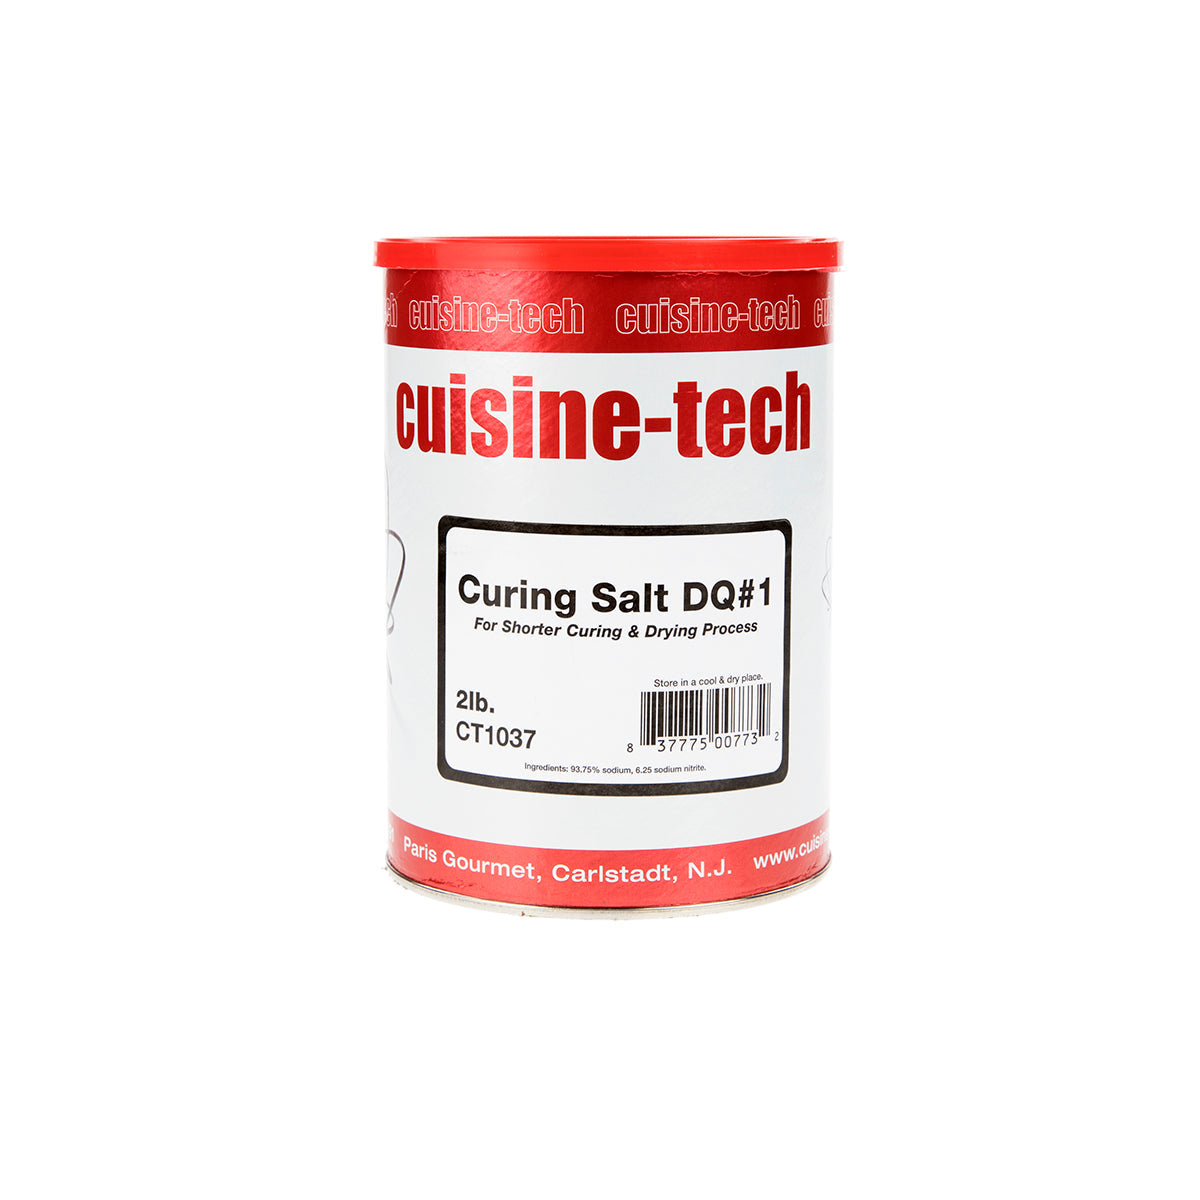 Cuisine Tech Curing Salt DQ #1